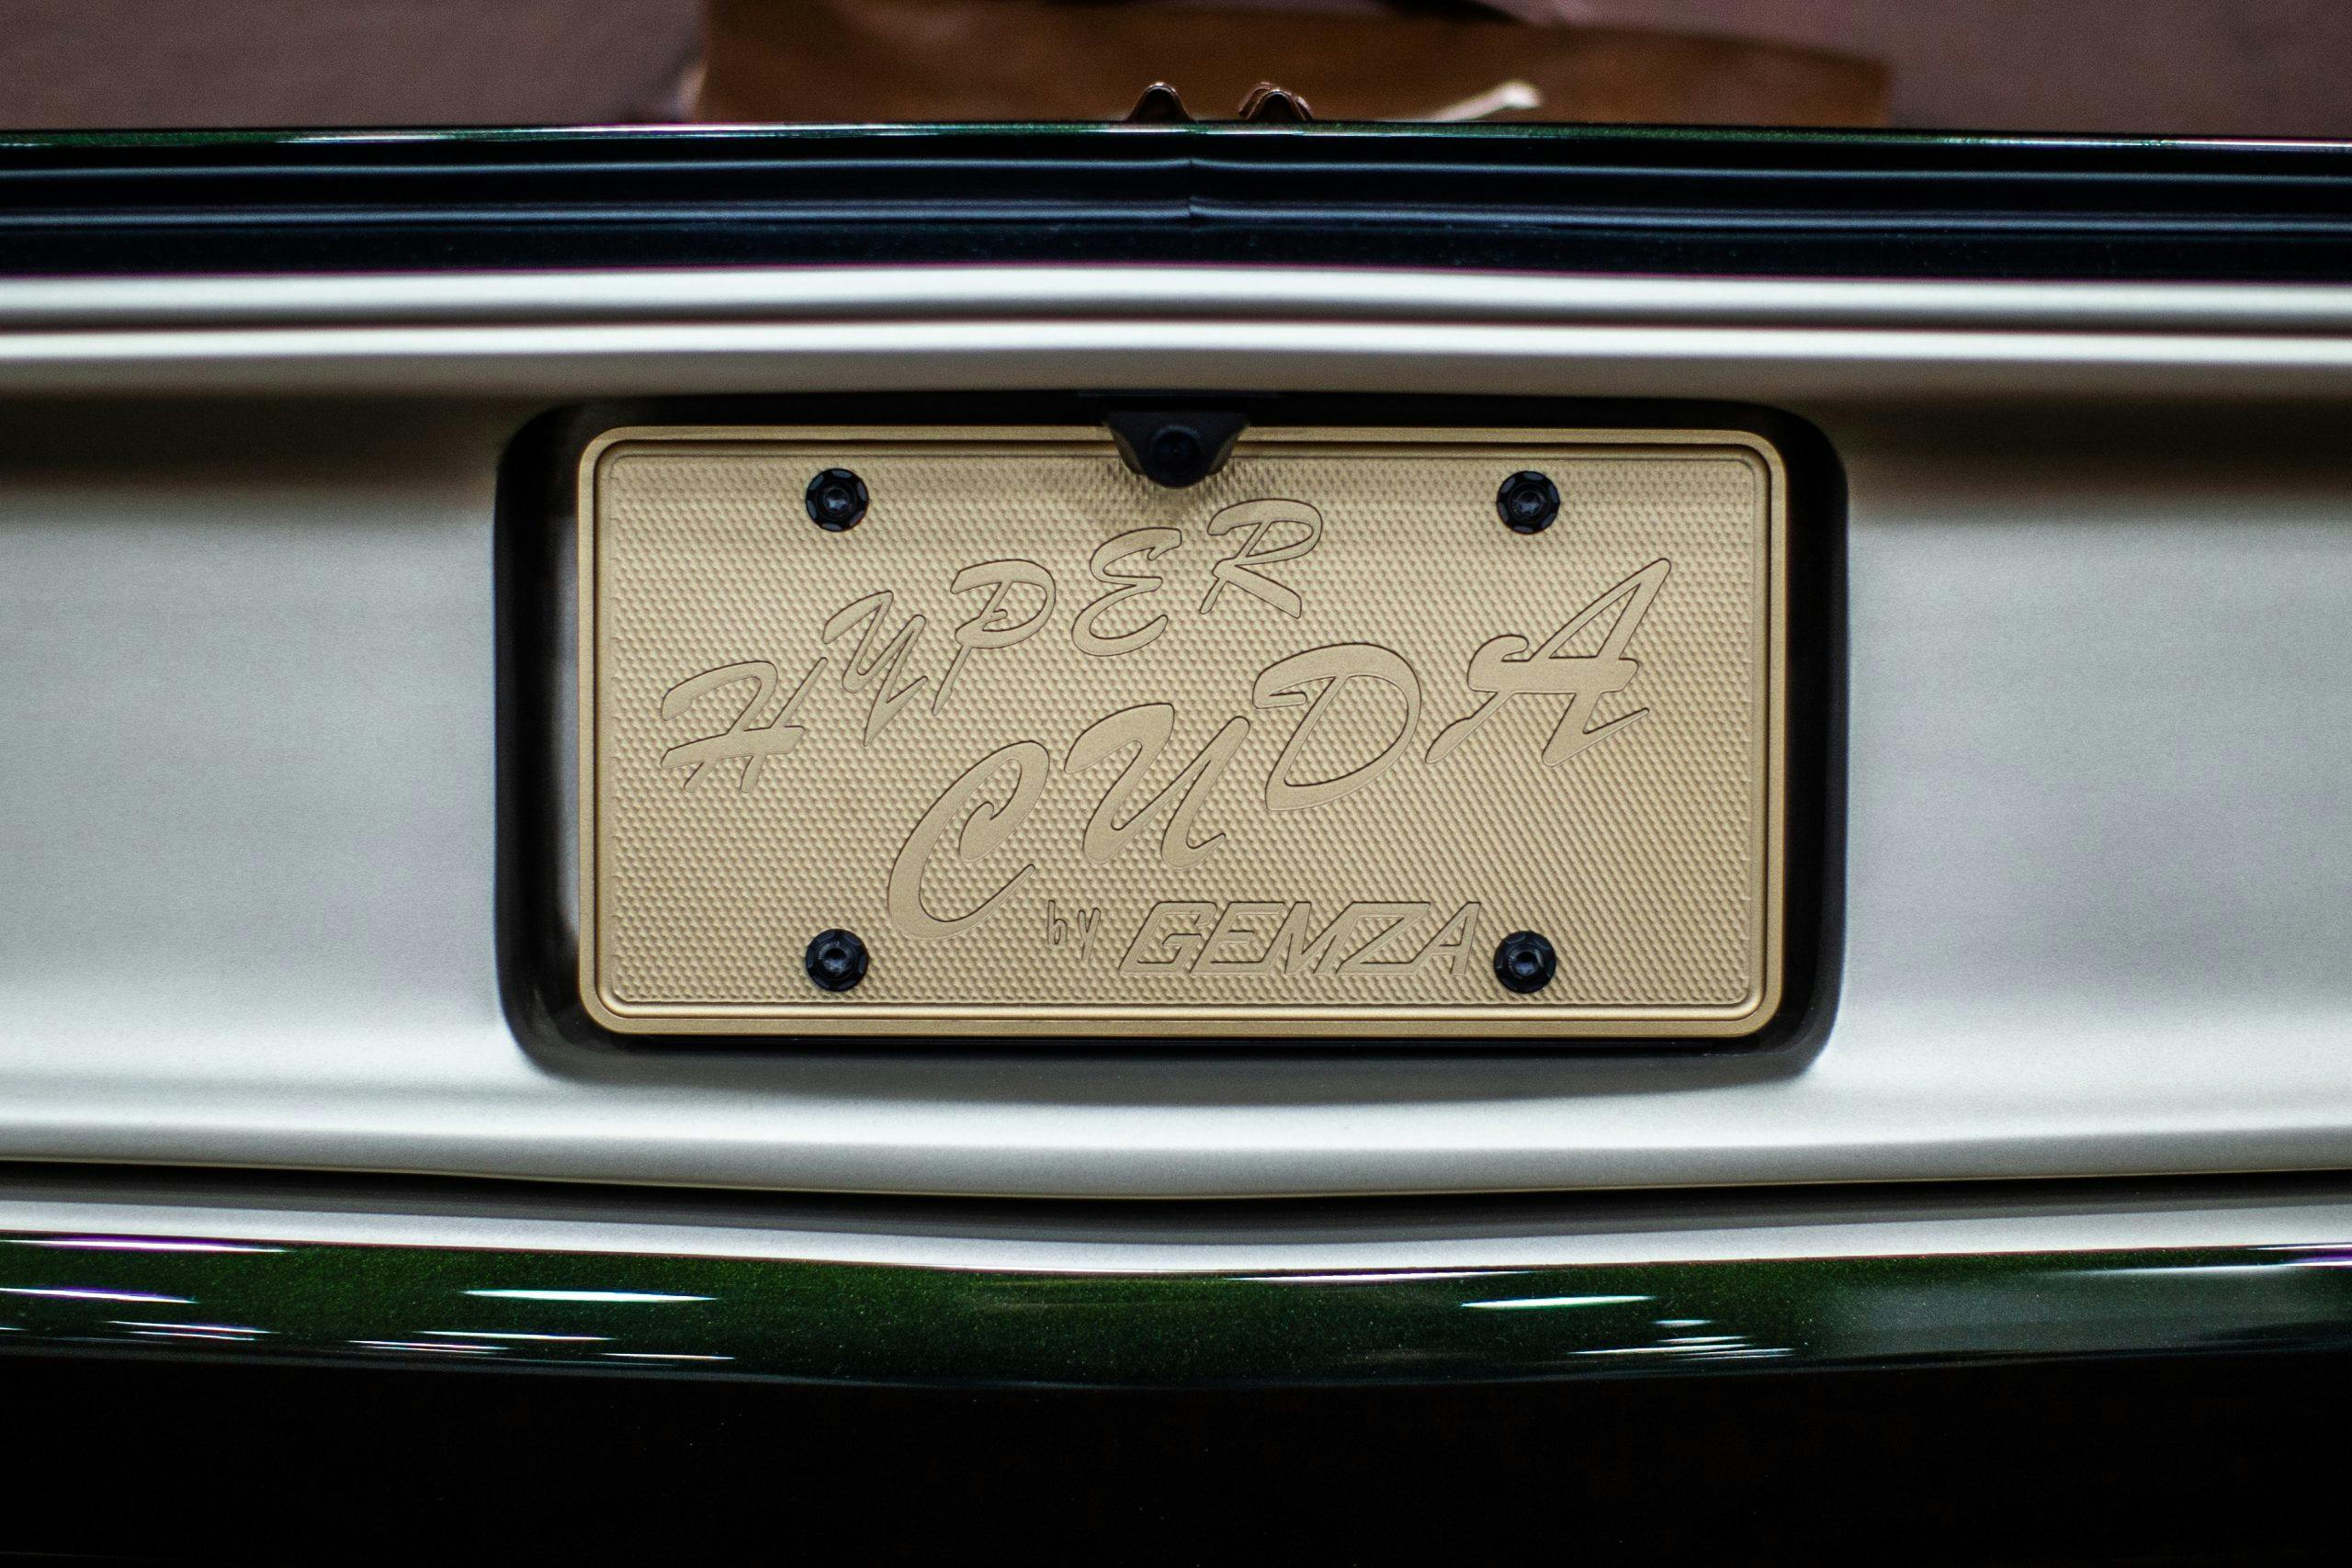 1970 “Hyper Cuda” Plymouth Barracuda license plate